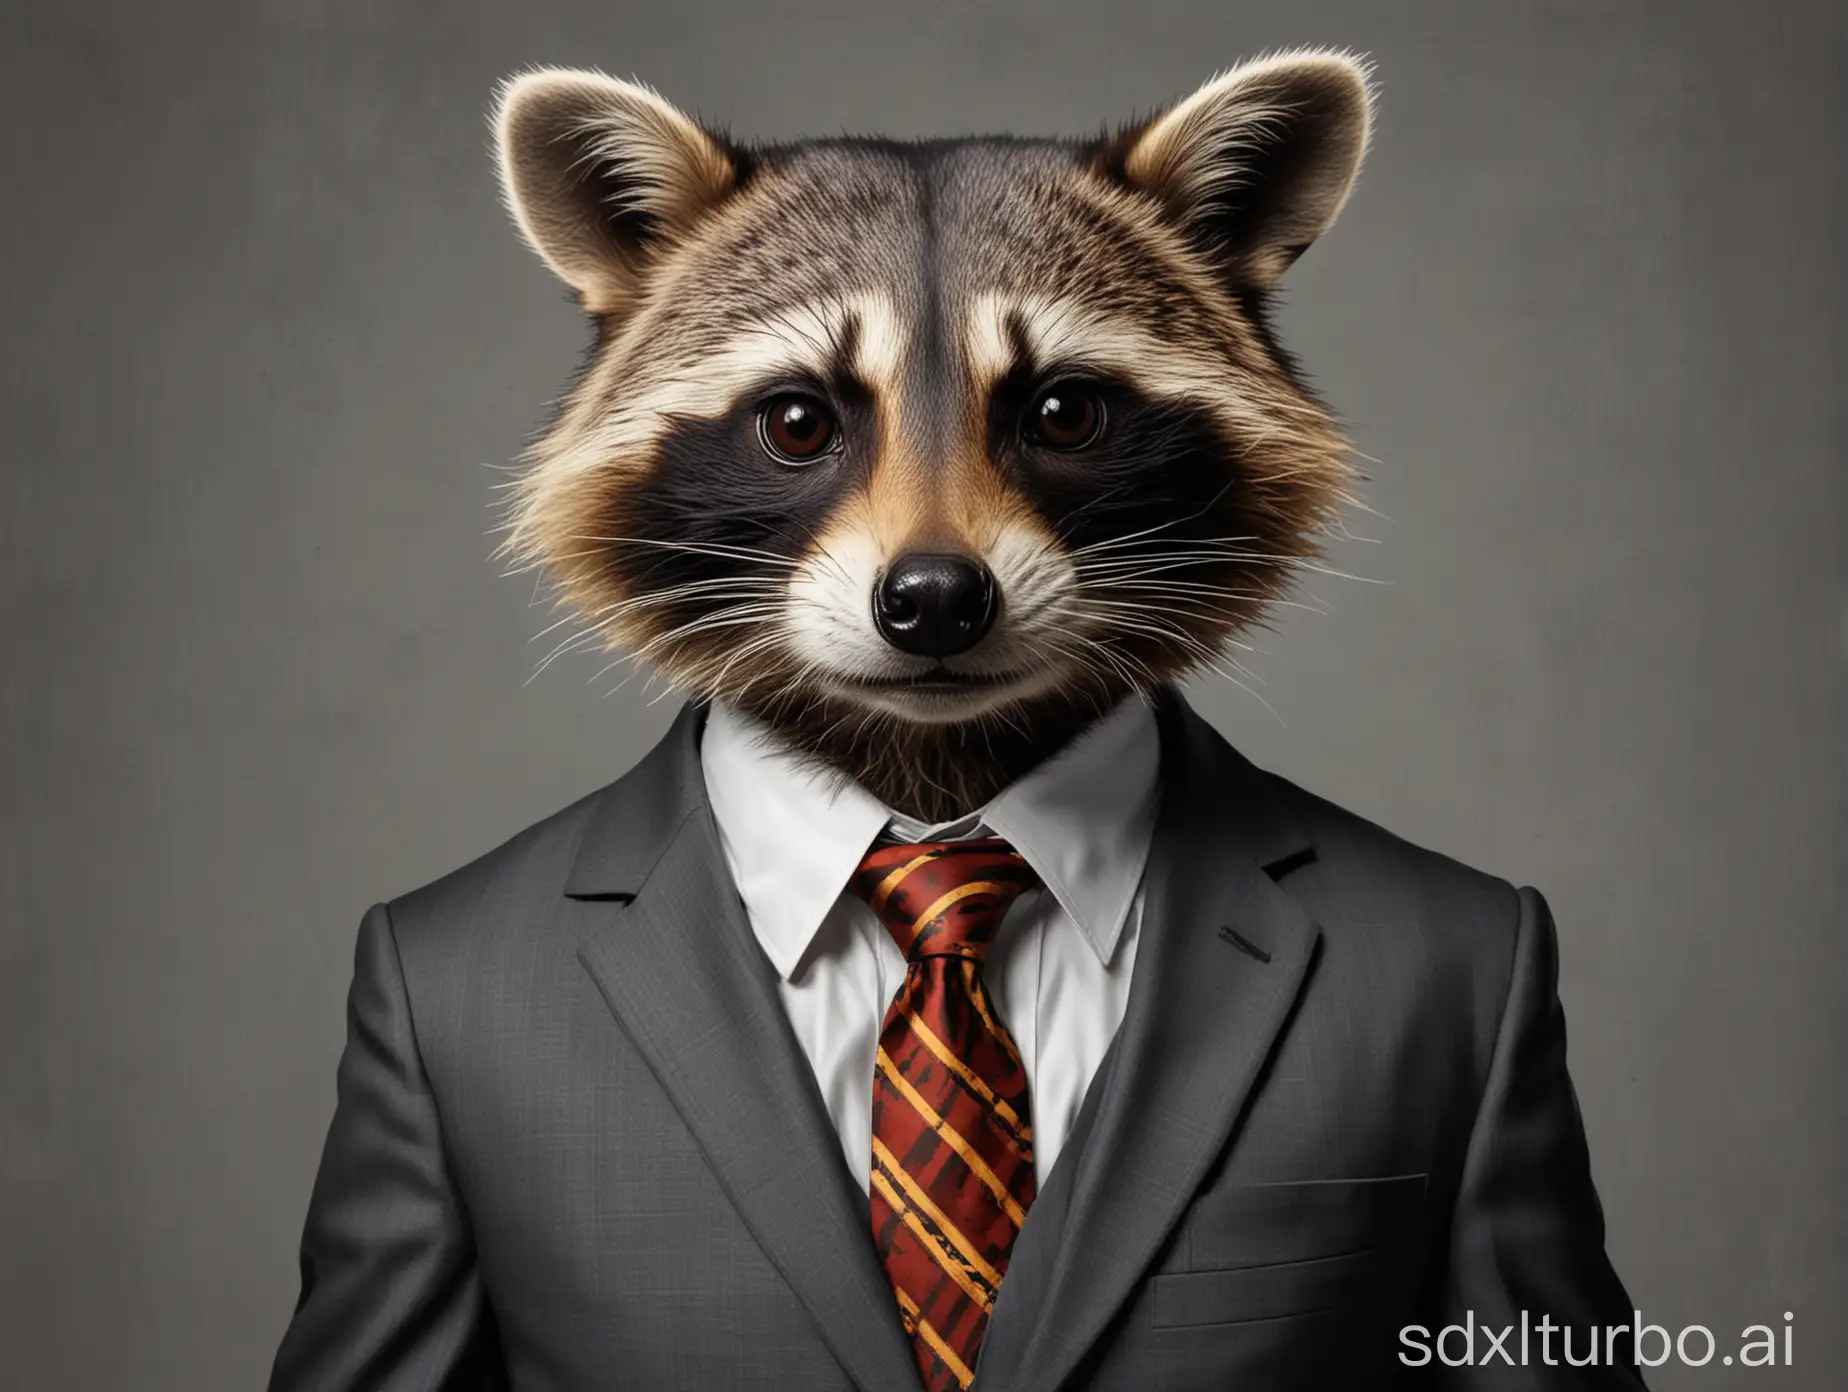 Stylish-Raccoon-Pop-Art-in-Suit-Quirky-Animal-Fashion-Illustration